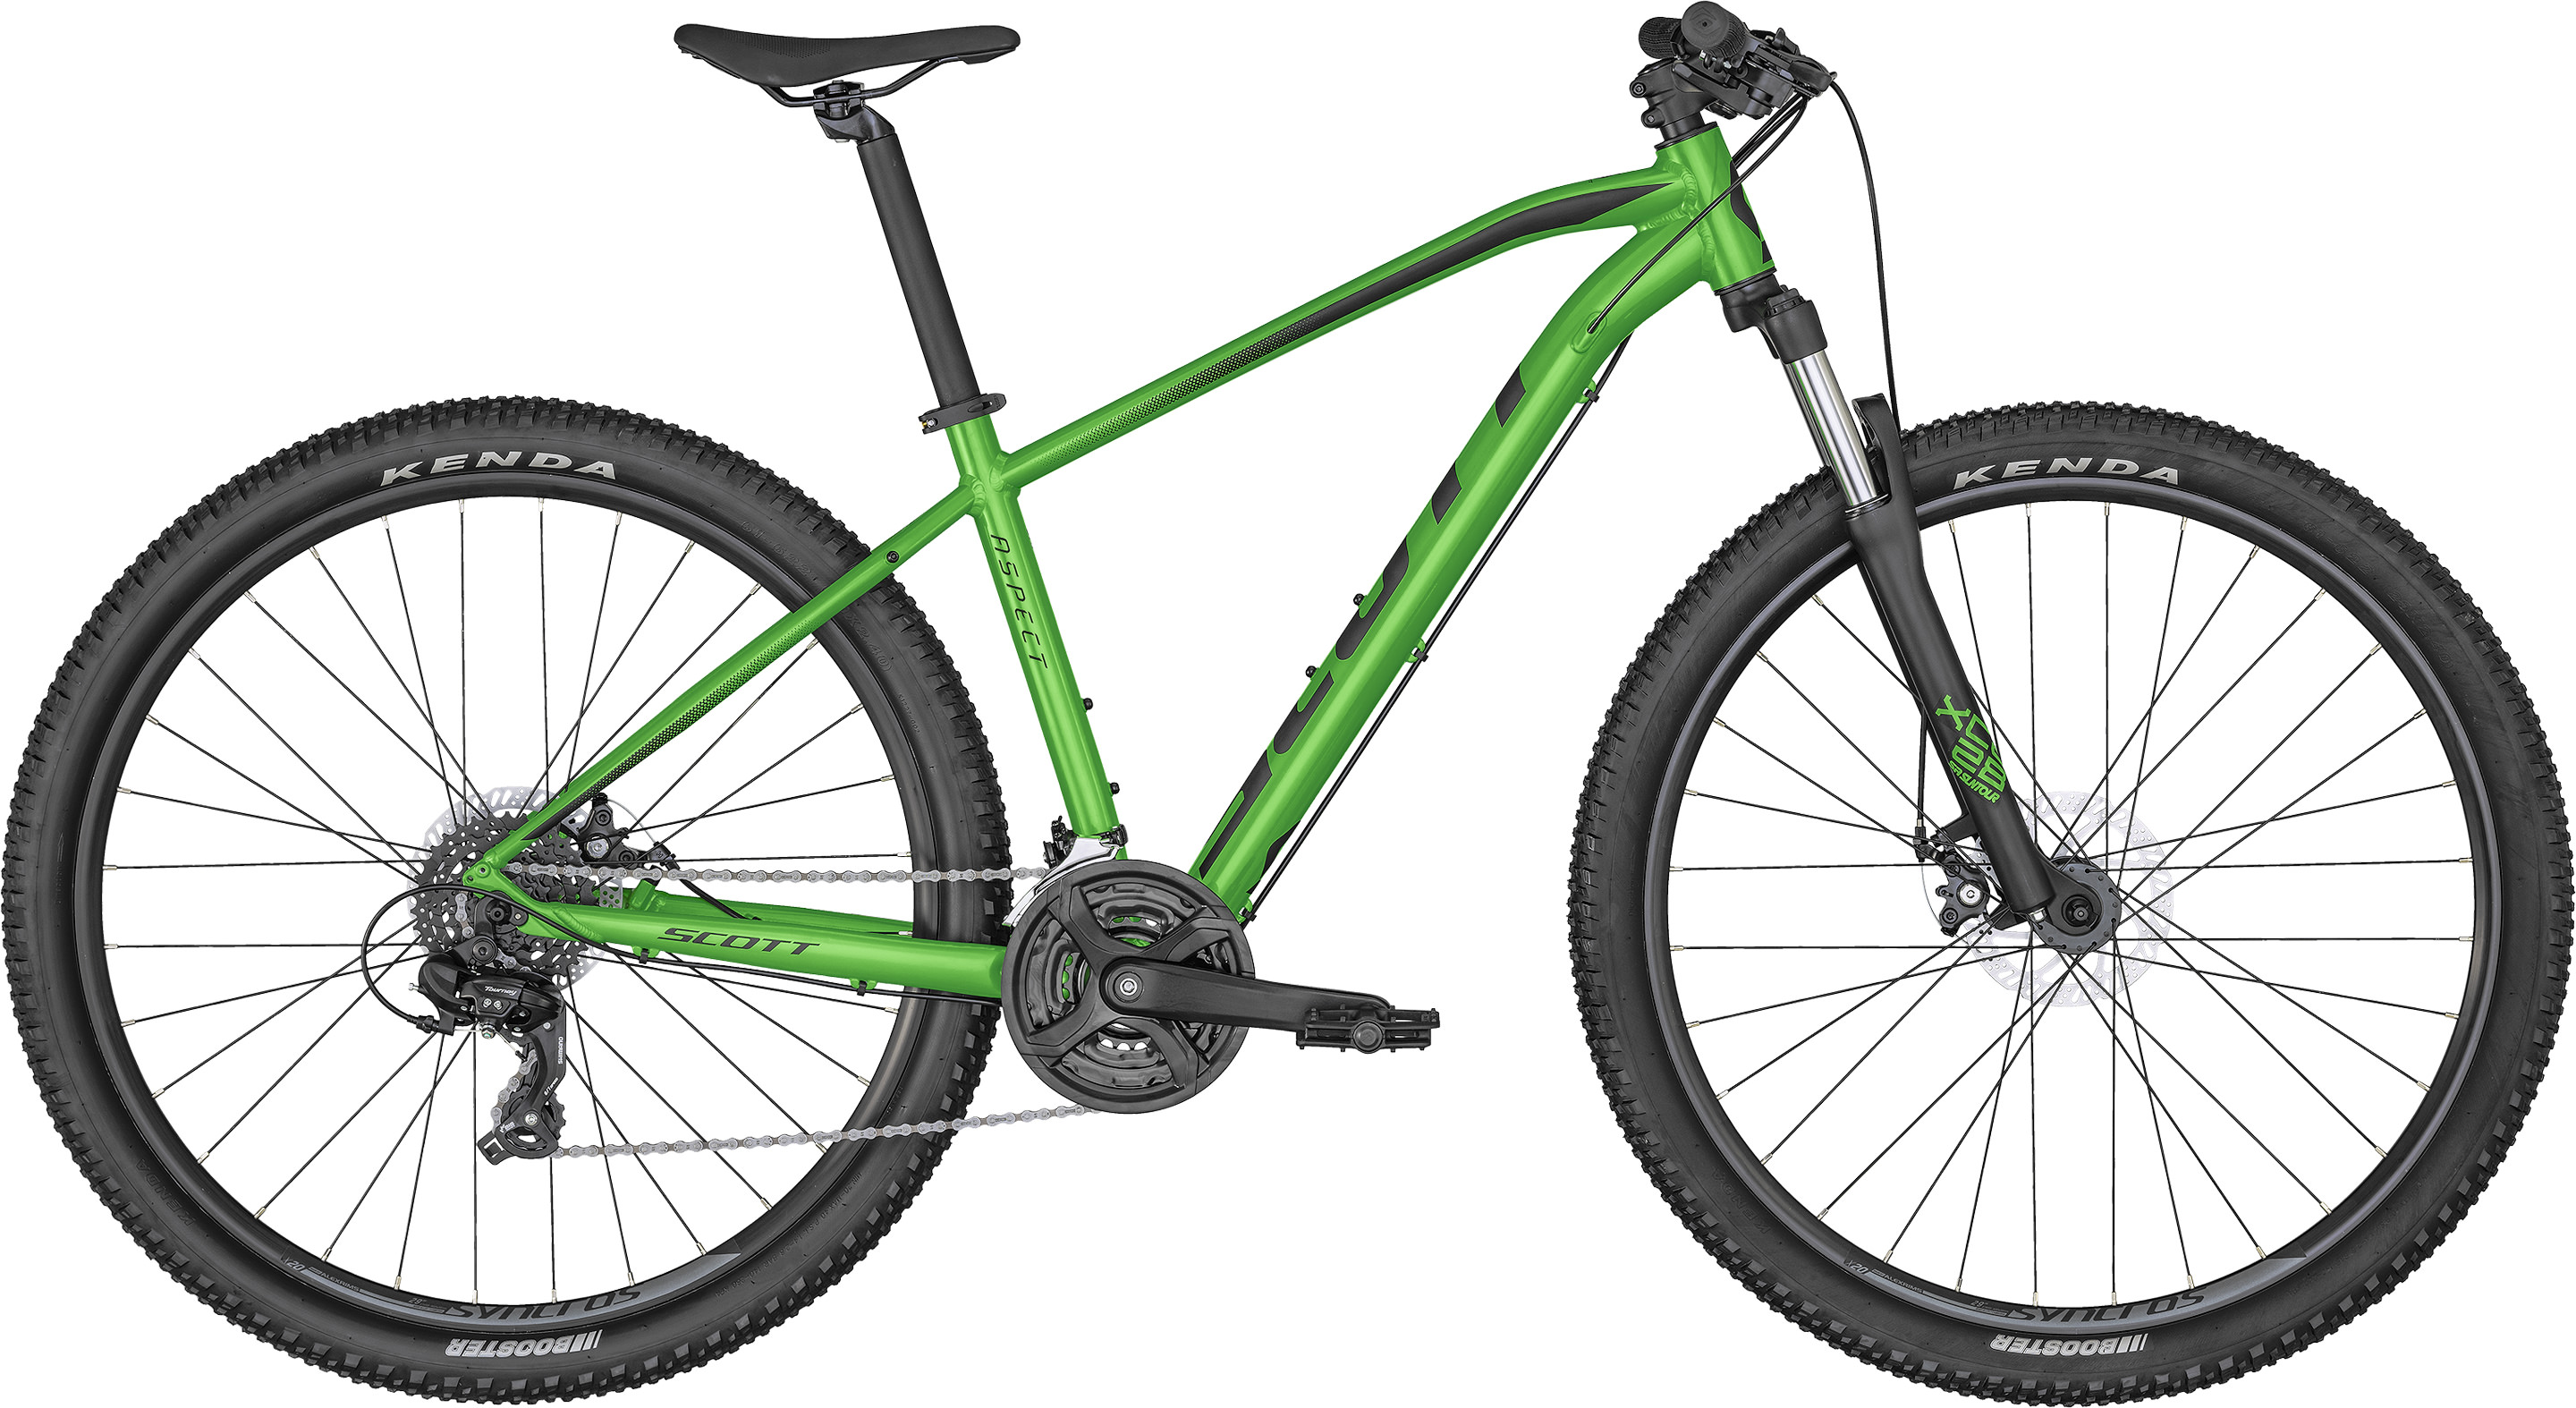 Aspect 970 green | Culture Vélo